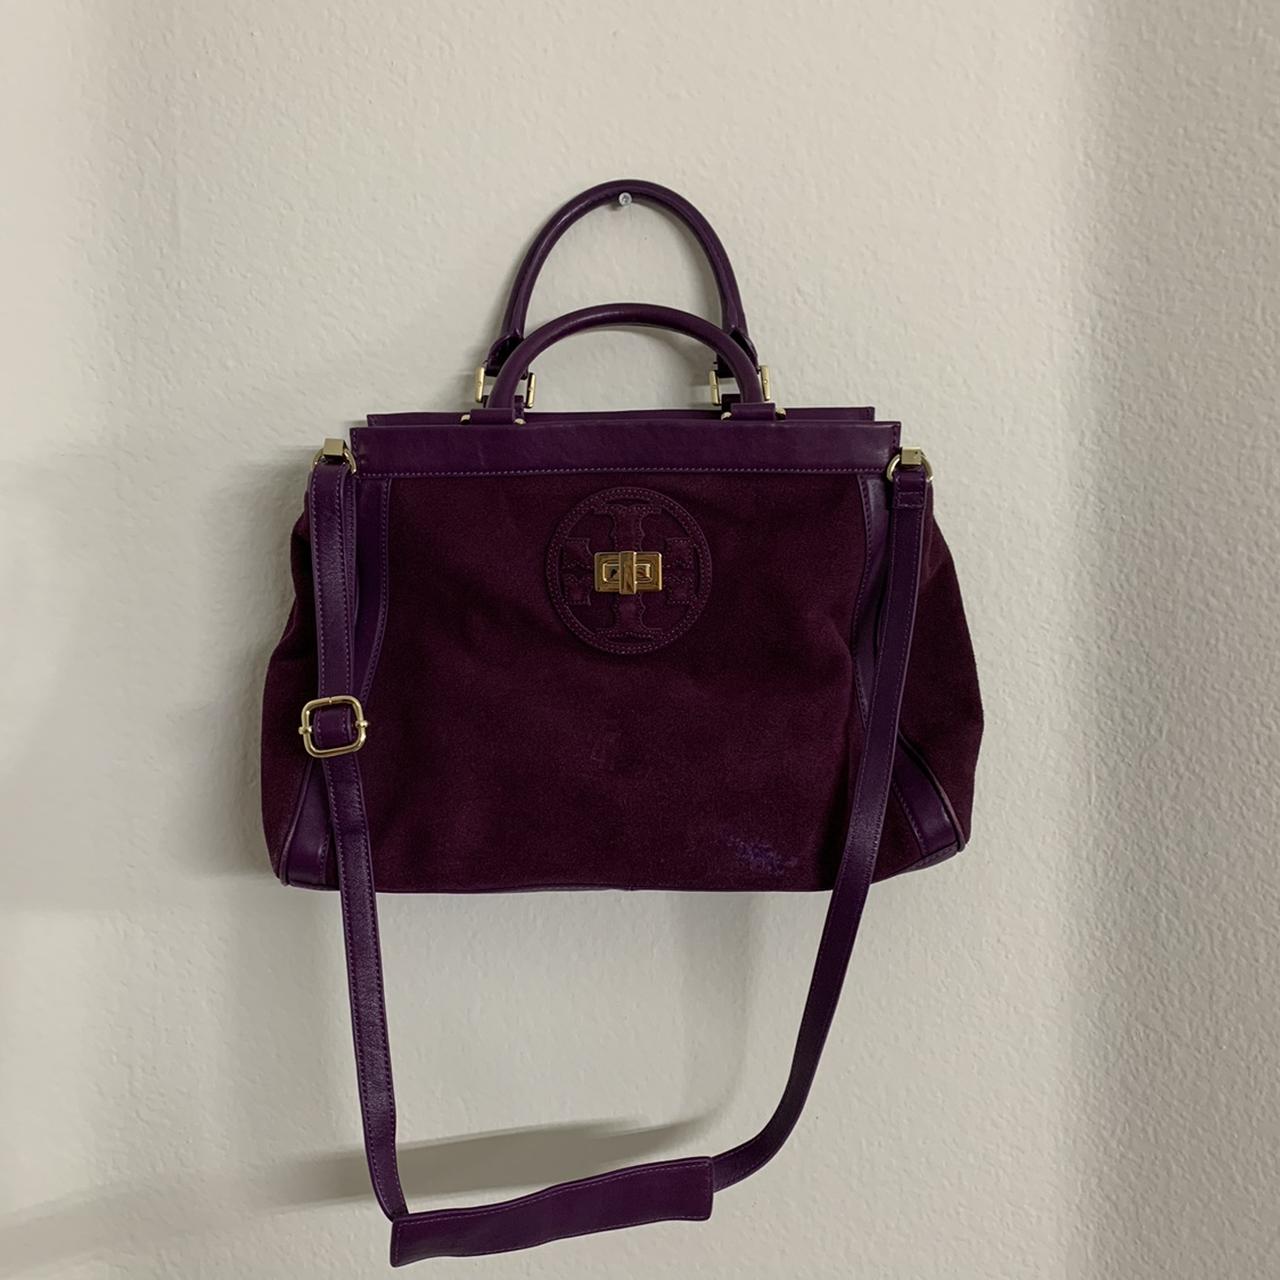 Tory Burch Purple Purse With Gold Accents - Crossbody Bags - Fair Oaks  Ranch, Texas | Facebook Marketplace | Facebook